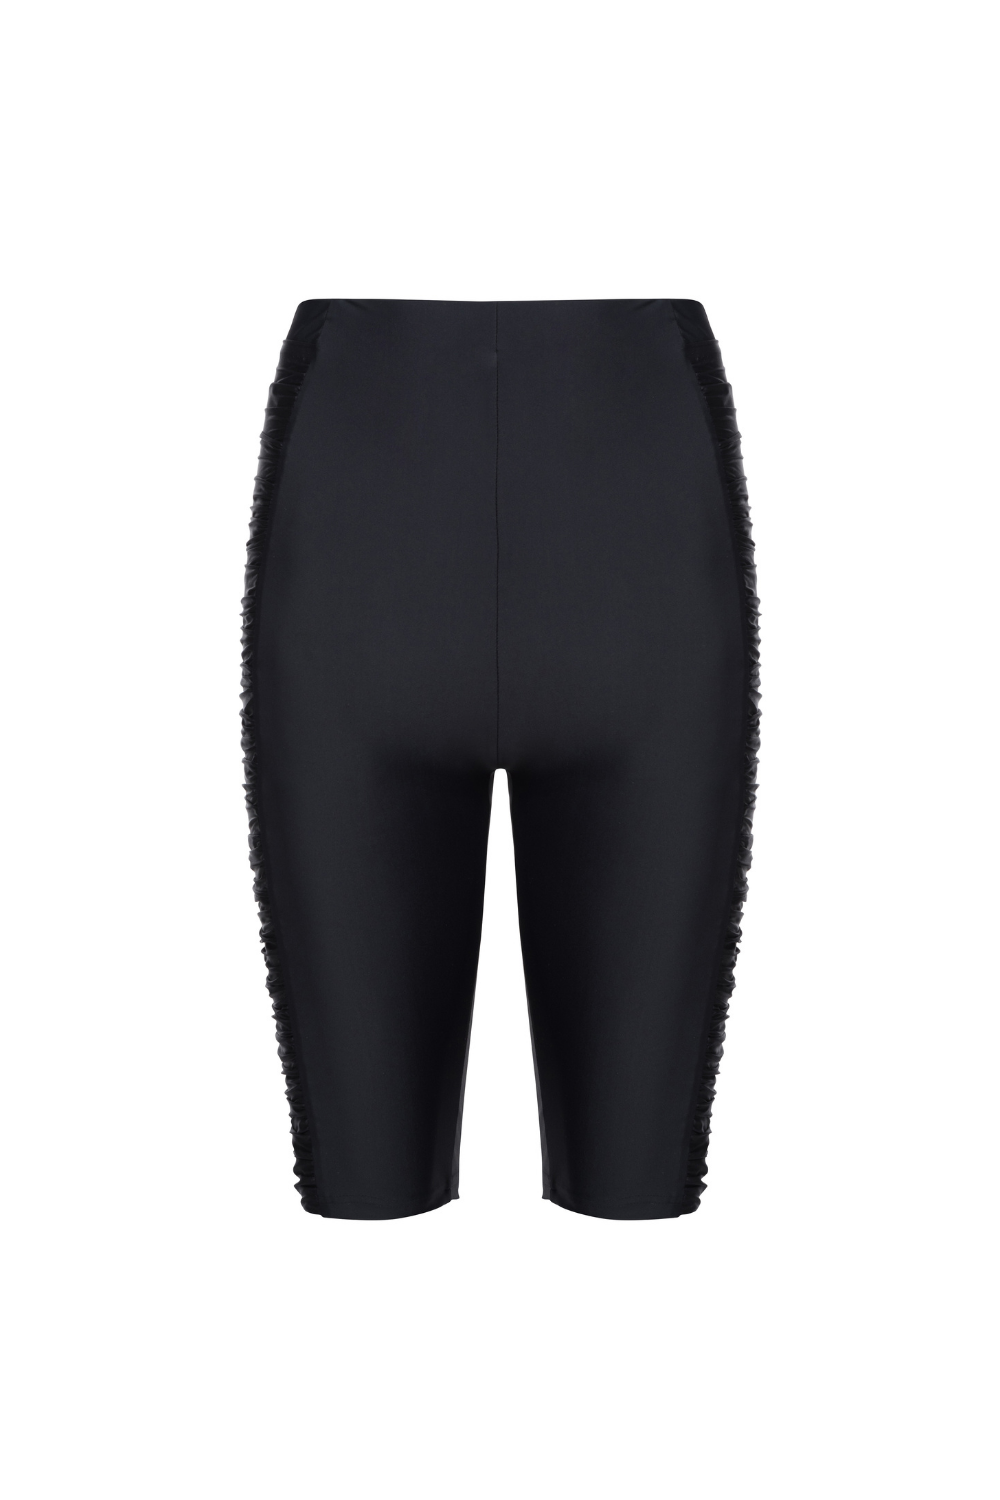 Black silk cycling shorts